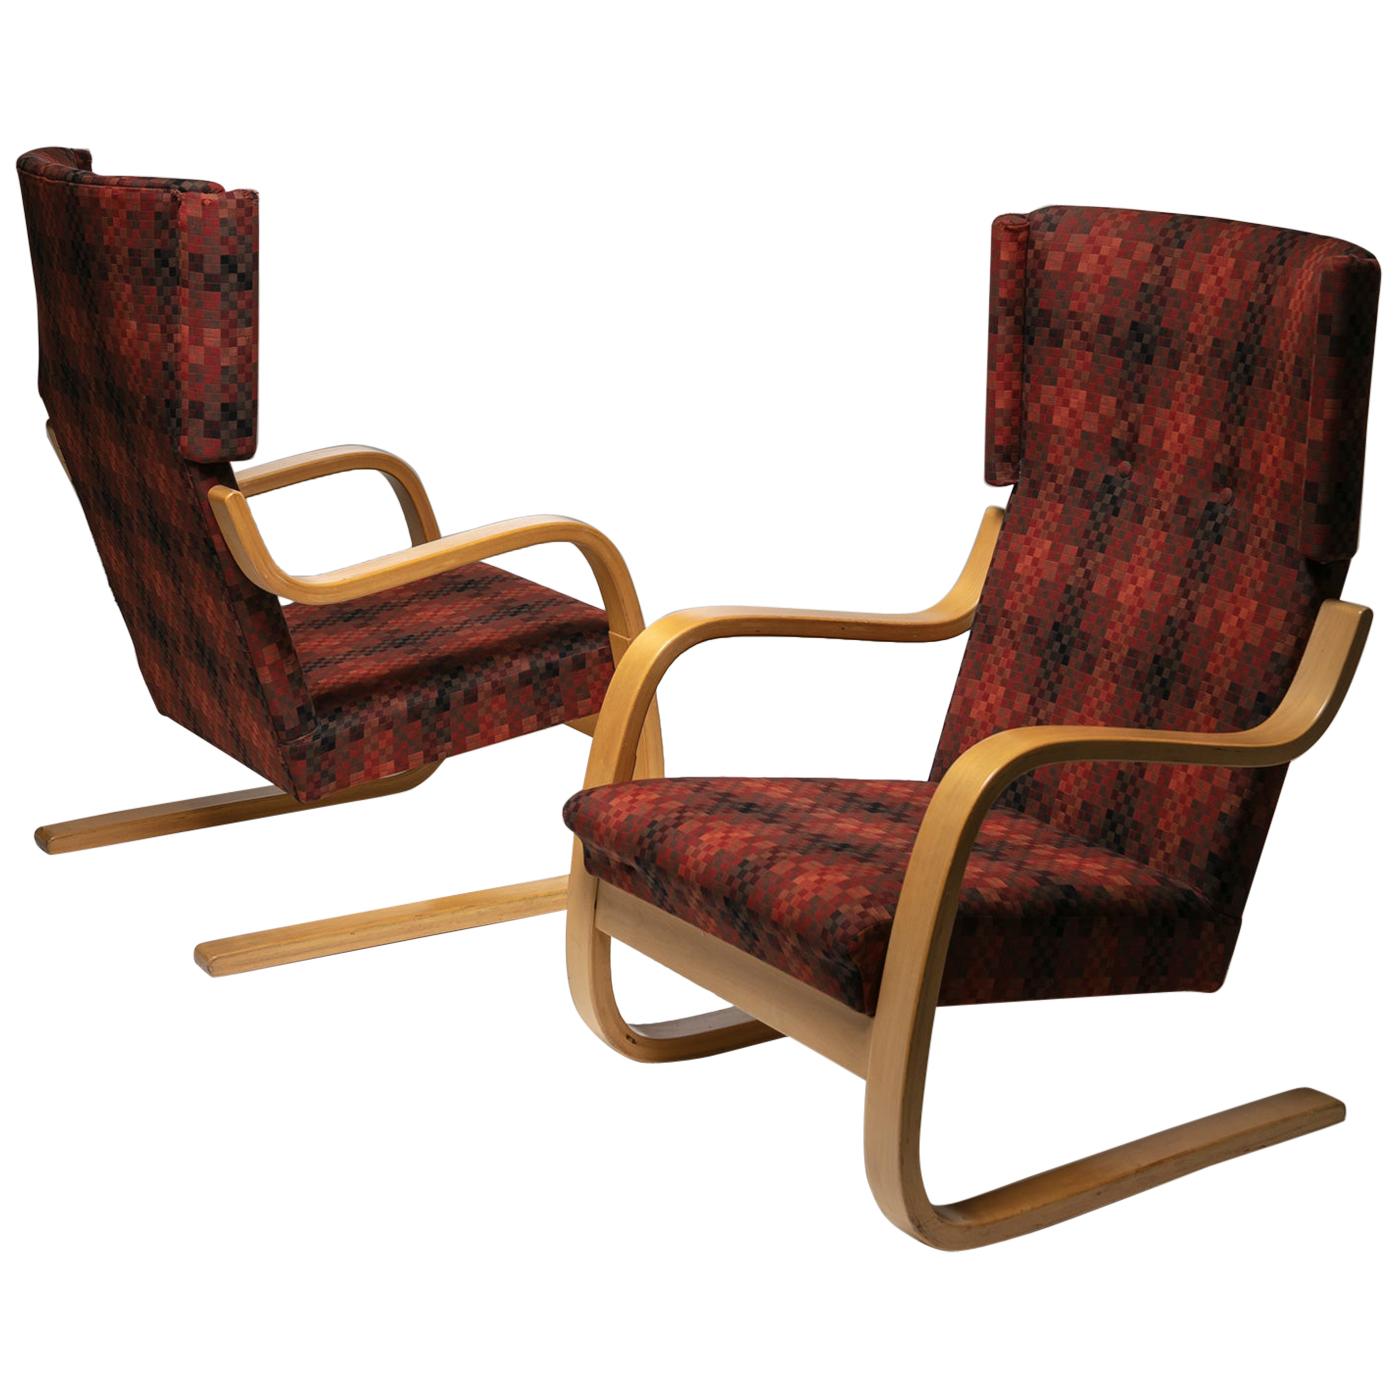 Rare Set of "401" Lounge Chairs by Alvar Aalto for Artek